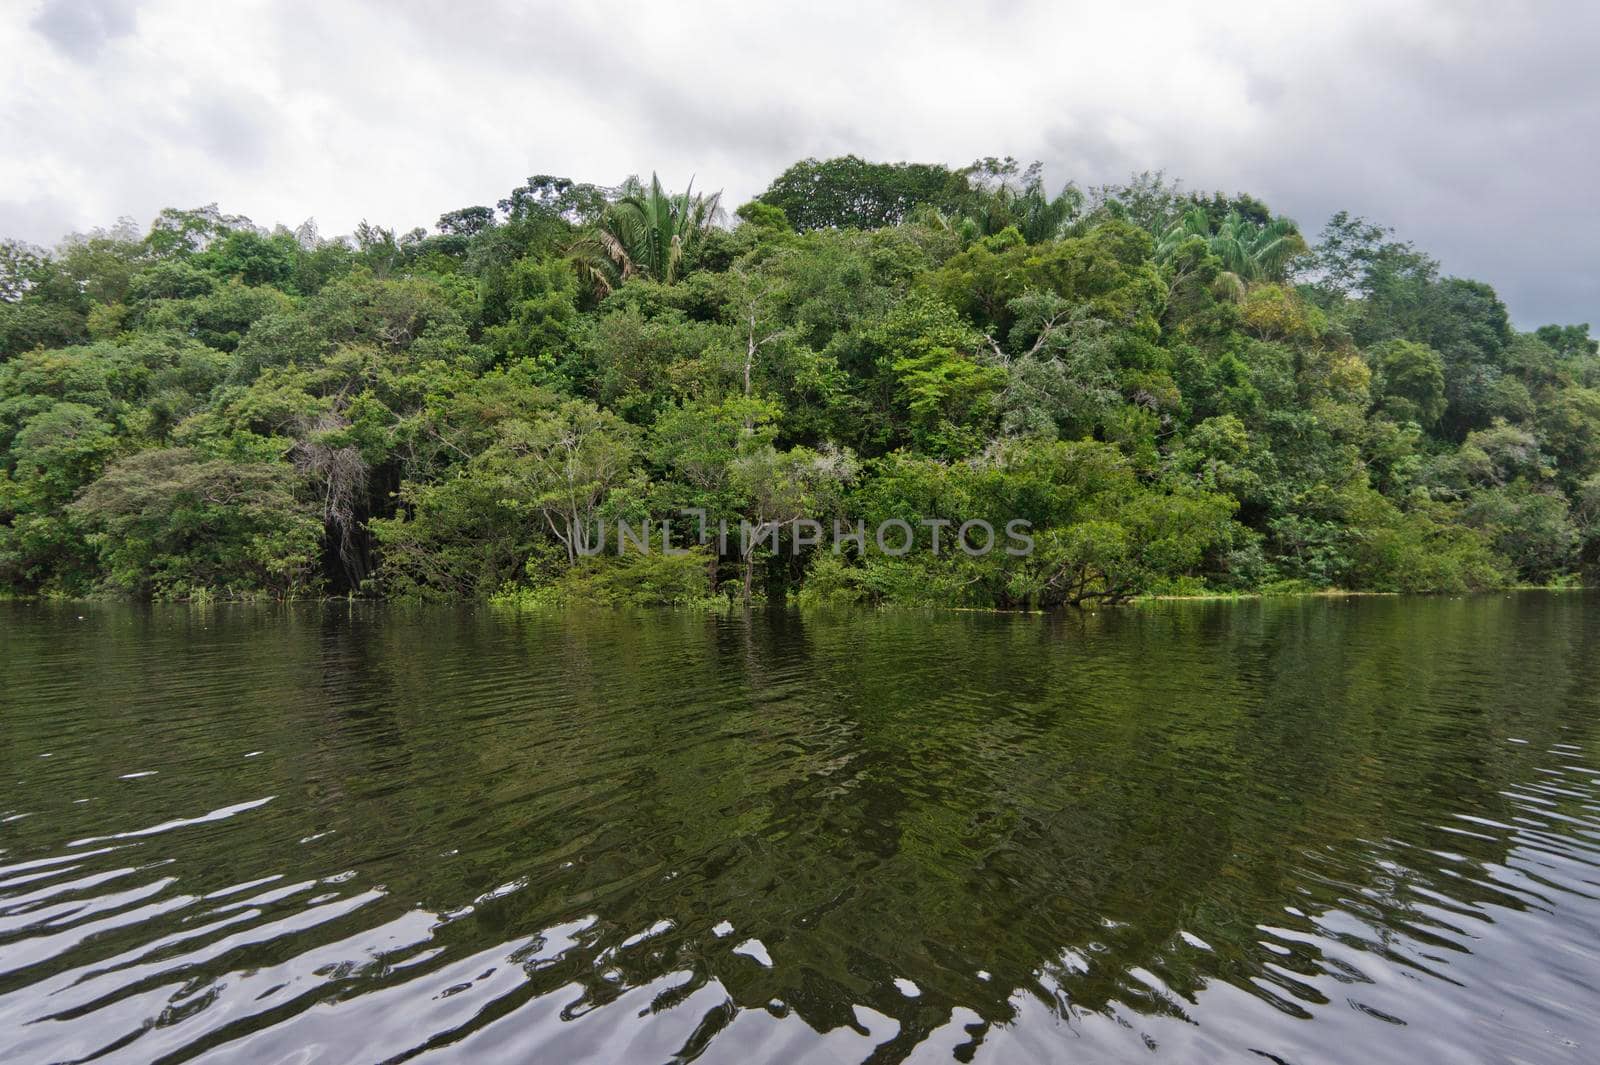 Amazon river reflection, Brazil, South America by giannakisphoto